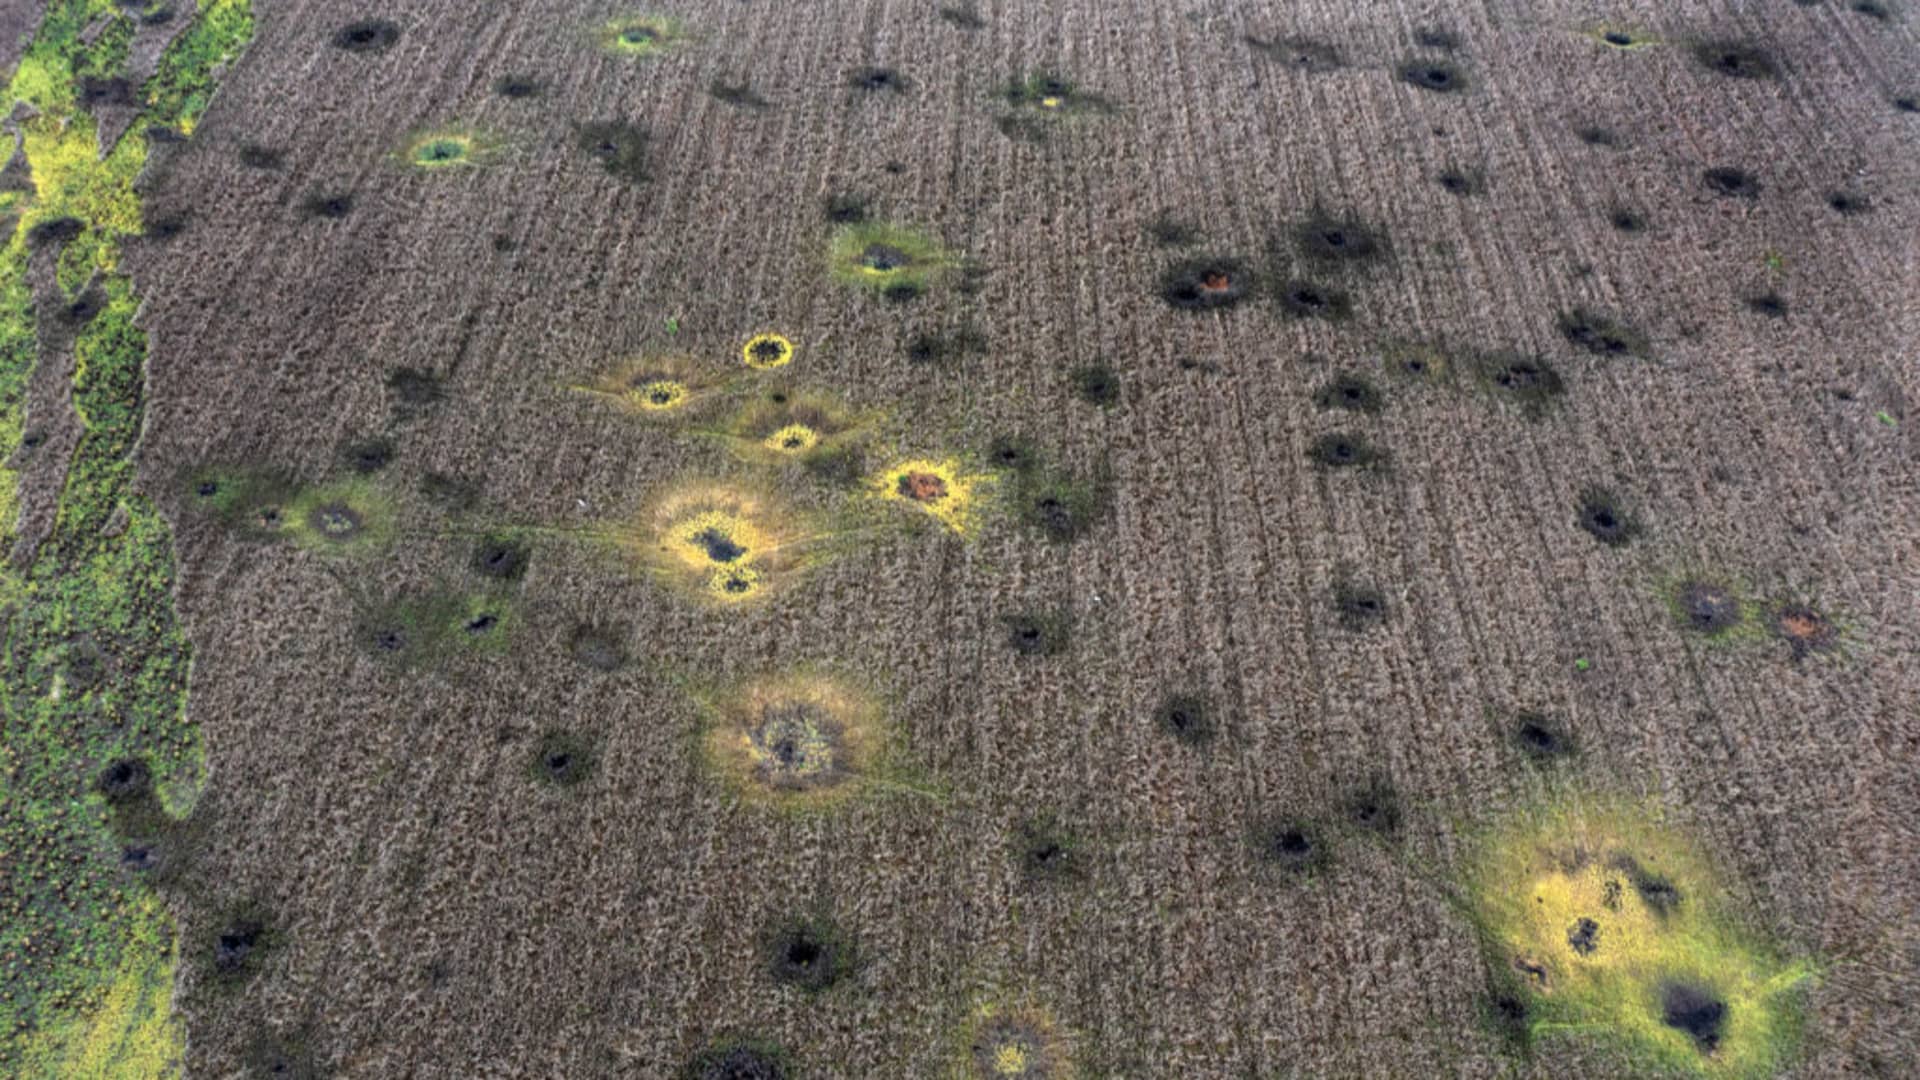 Artillery craters scar the landscape on October 24, 2022 in Sulyhivka, Kharkiv oblast, Ukraine.